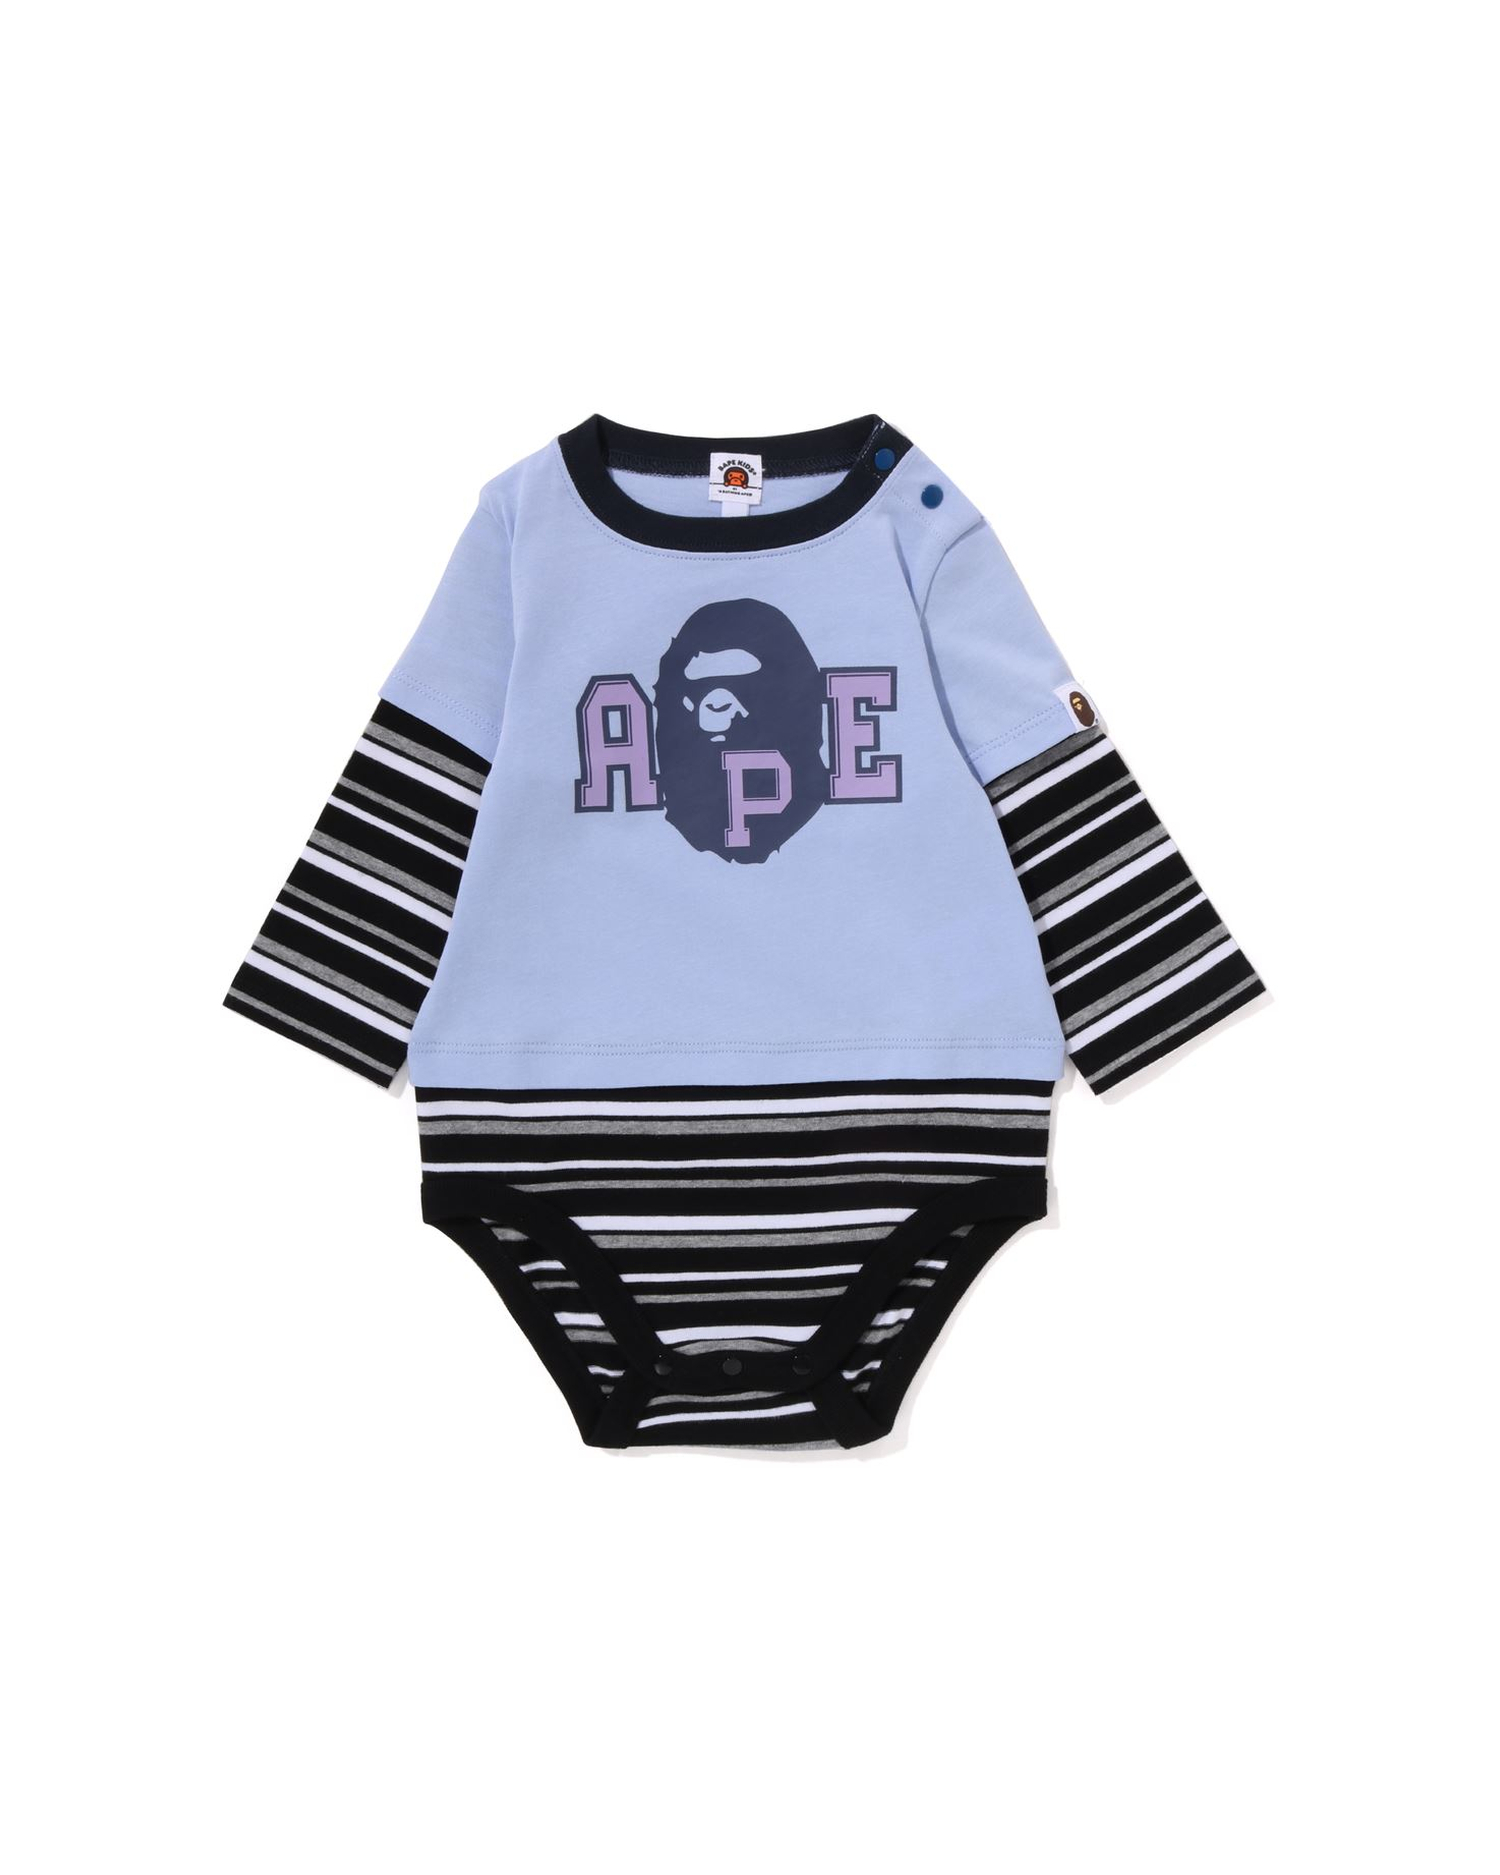 Shop Babies Hoop Ape Head Layered Bodysuit Online | BAPE